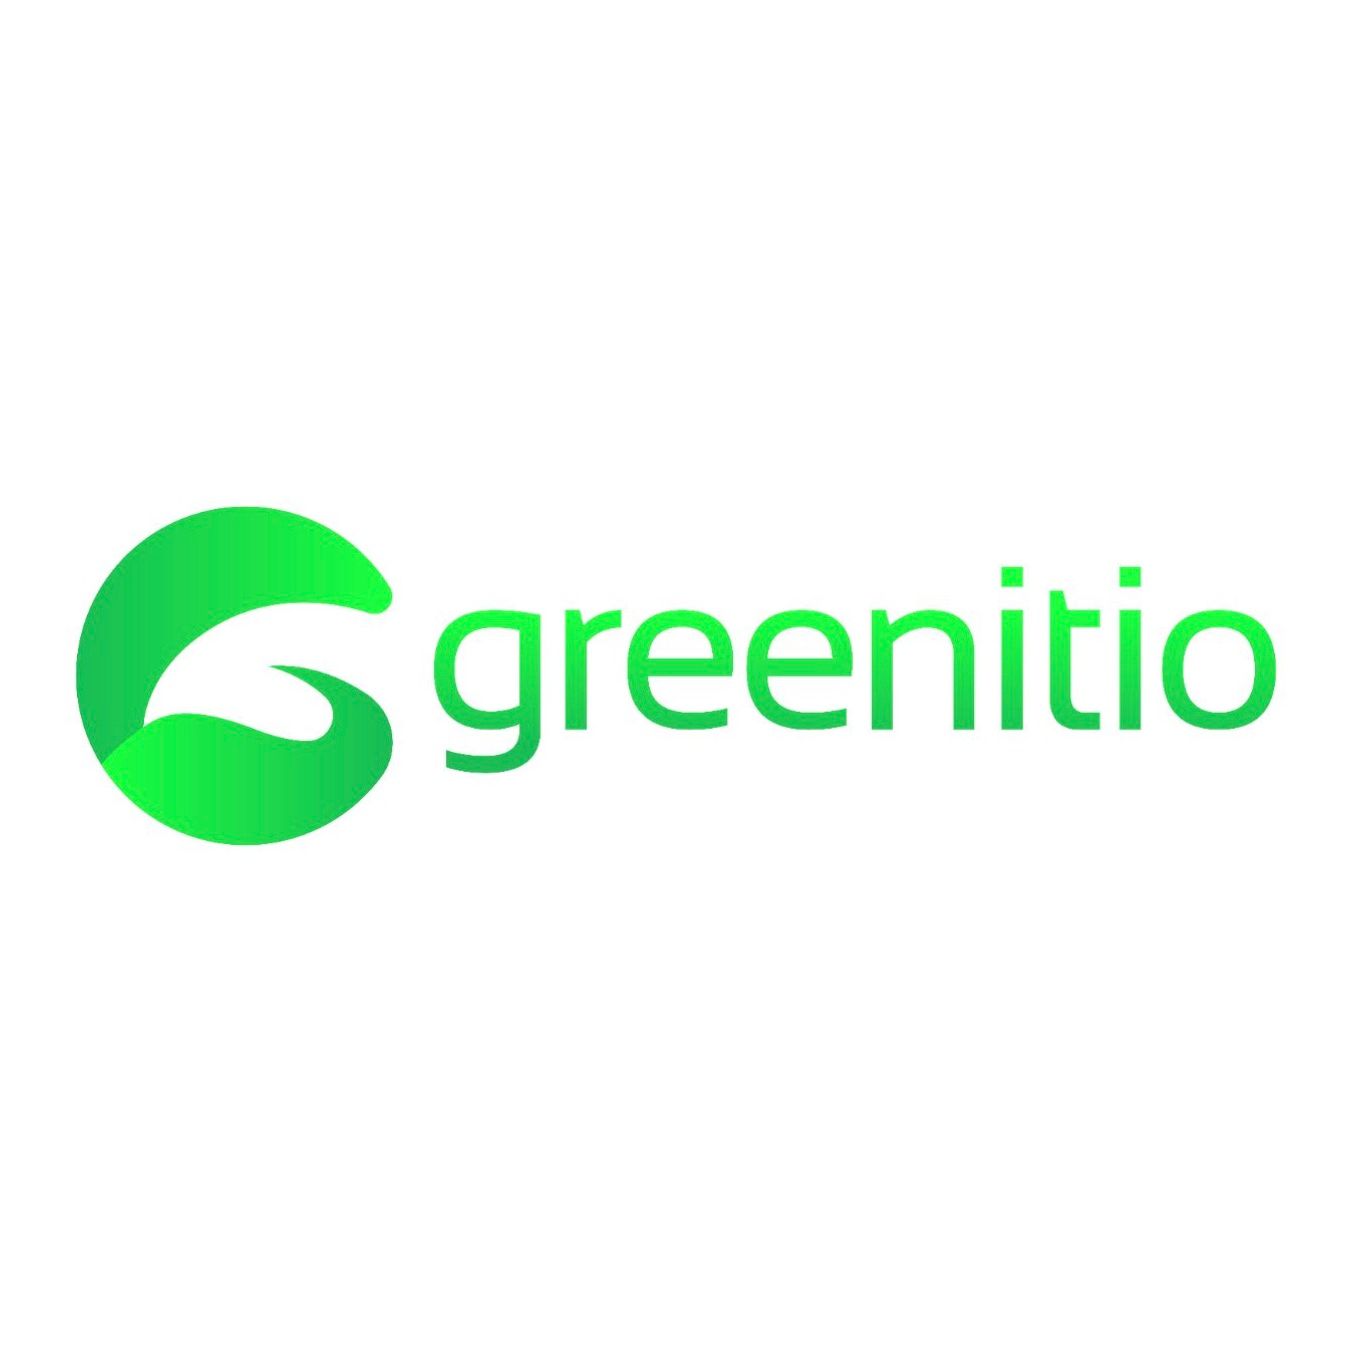 Greenitio